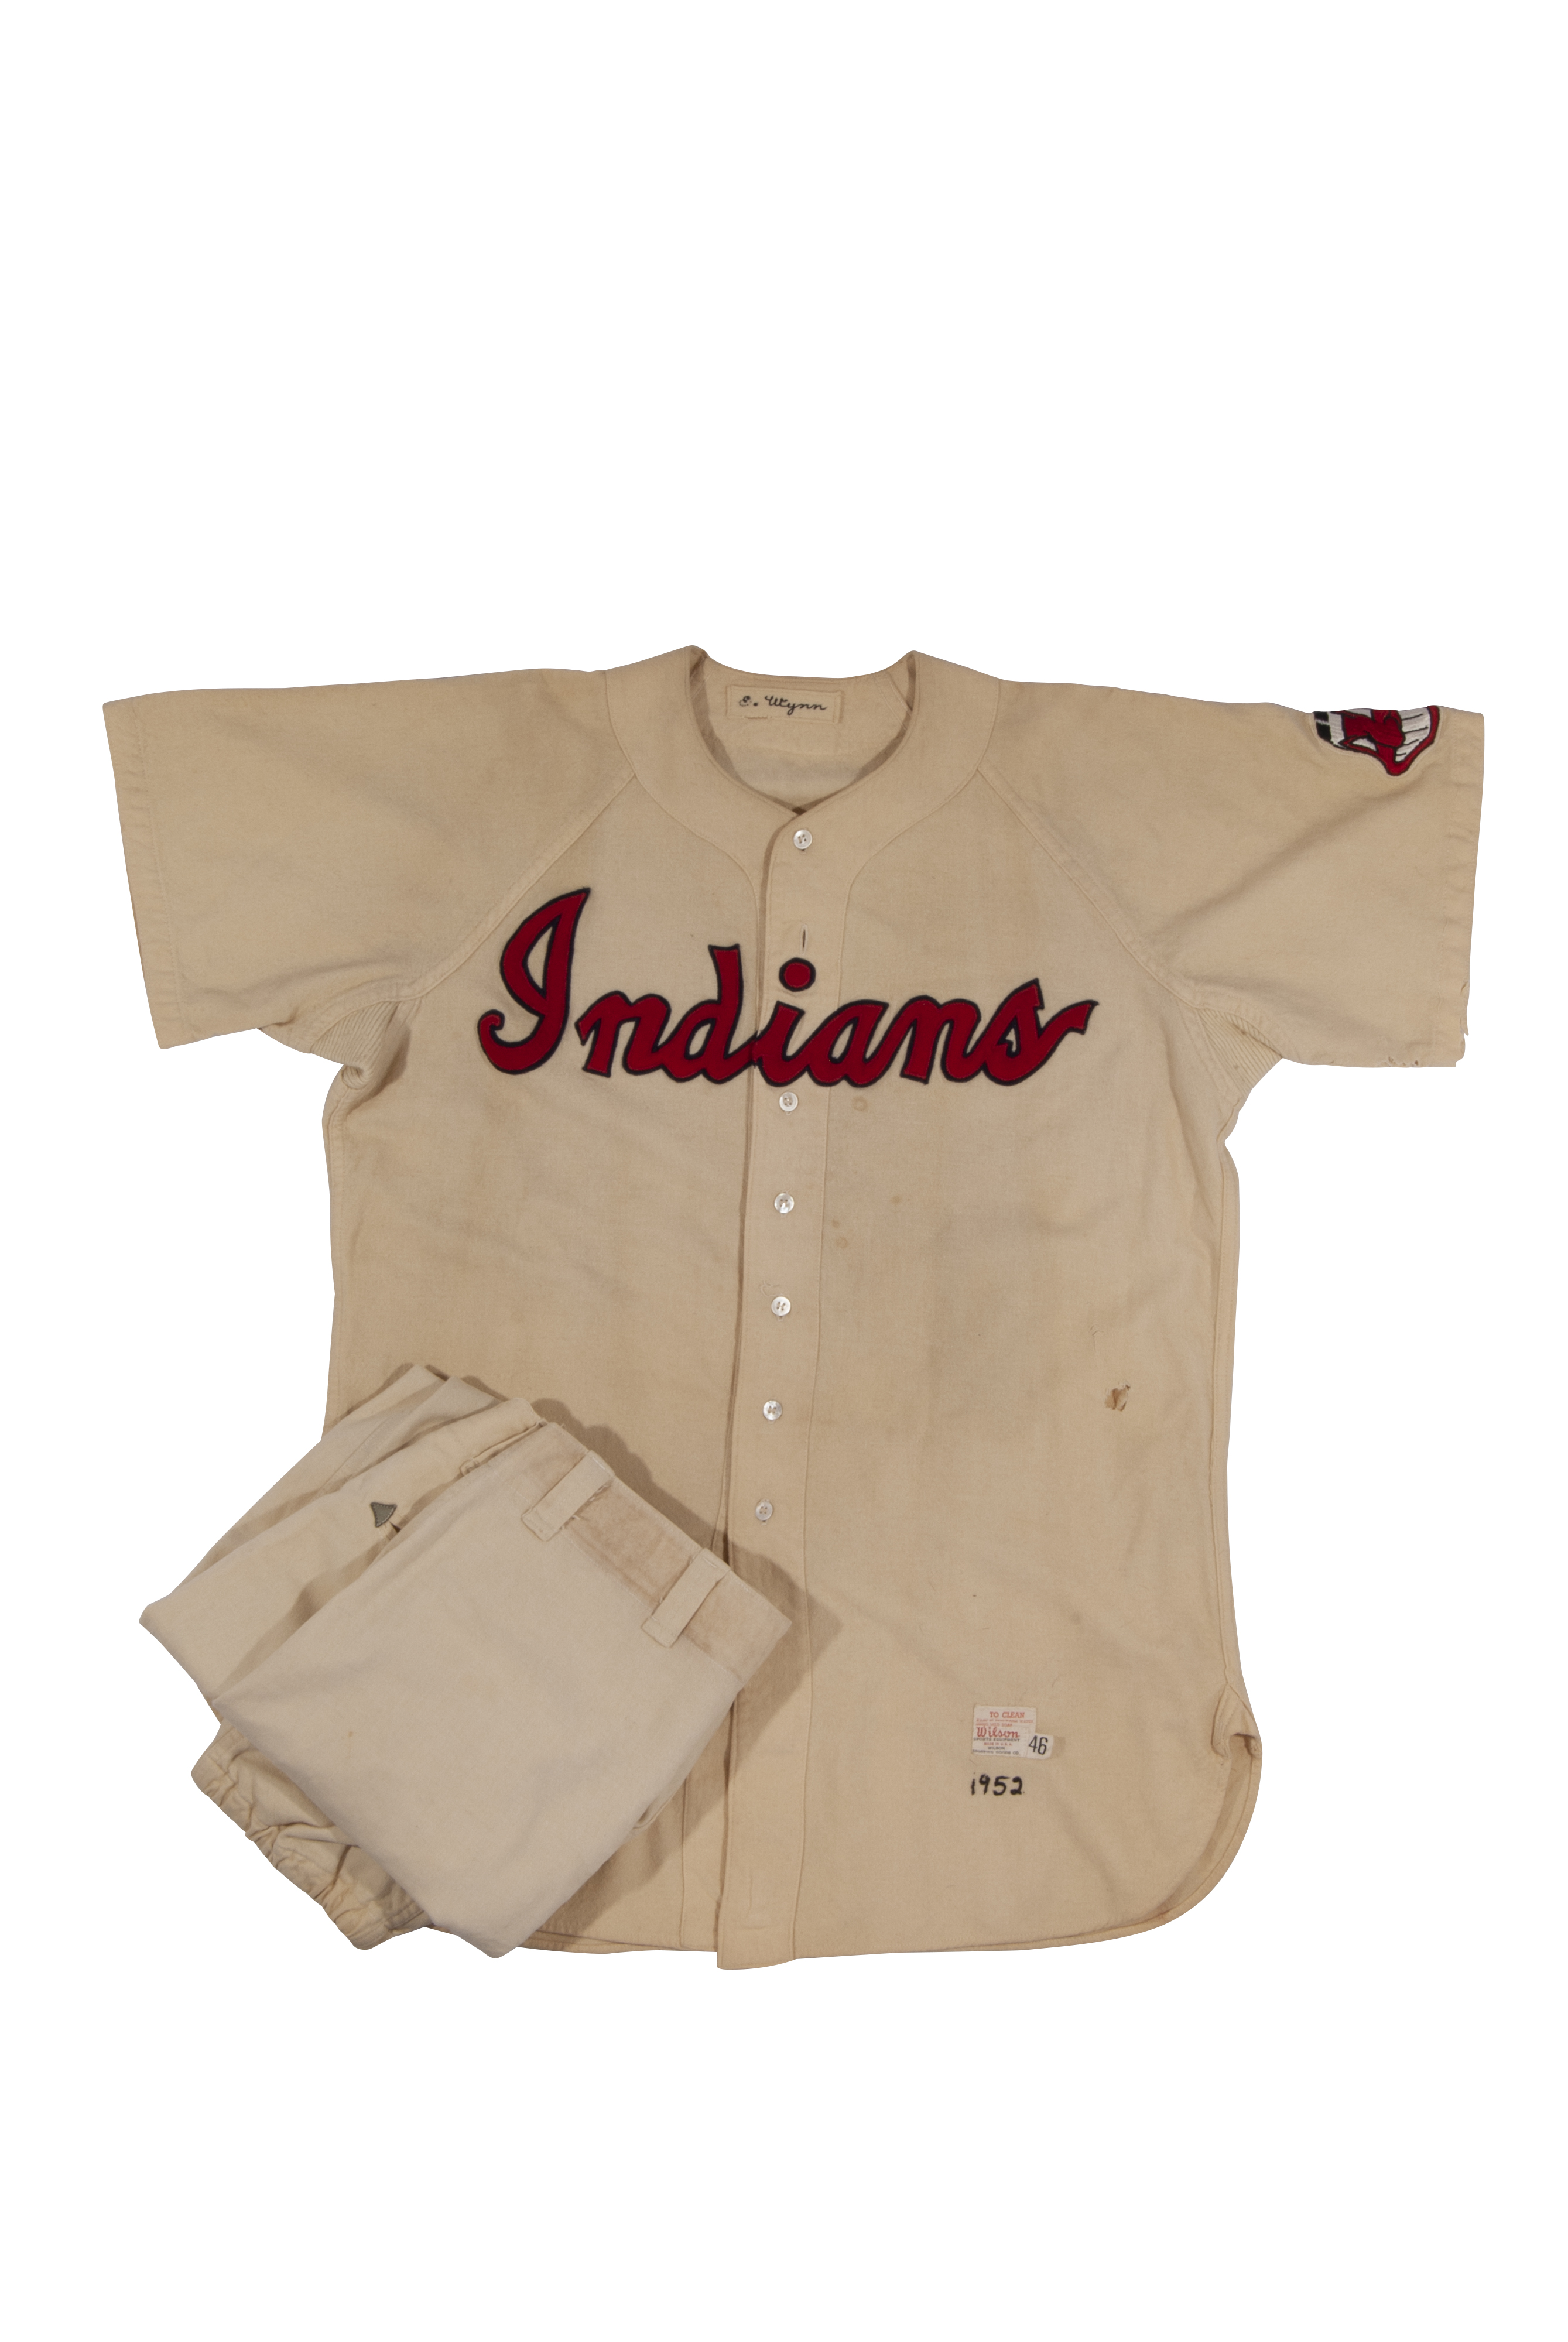 cleveland indians game worn jersey